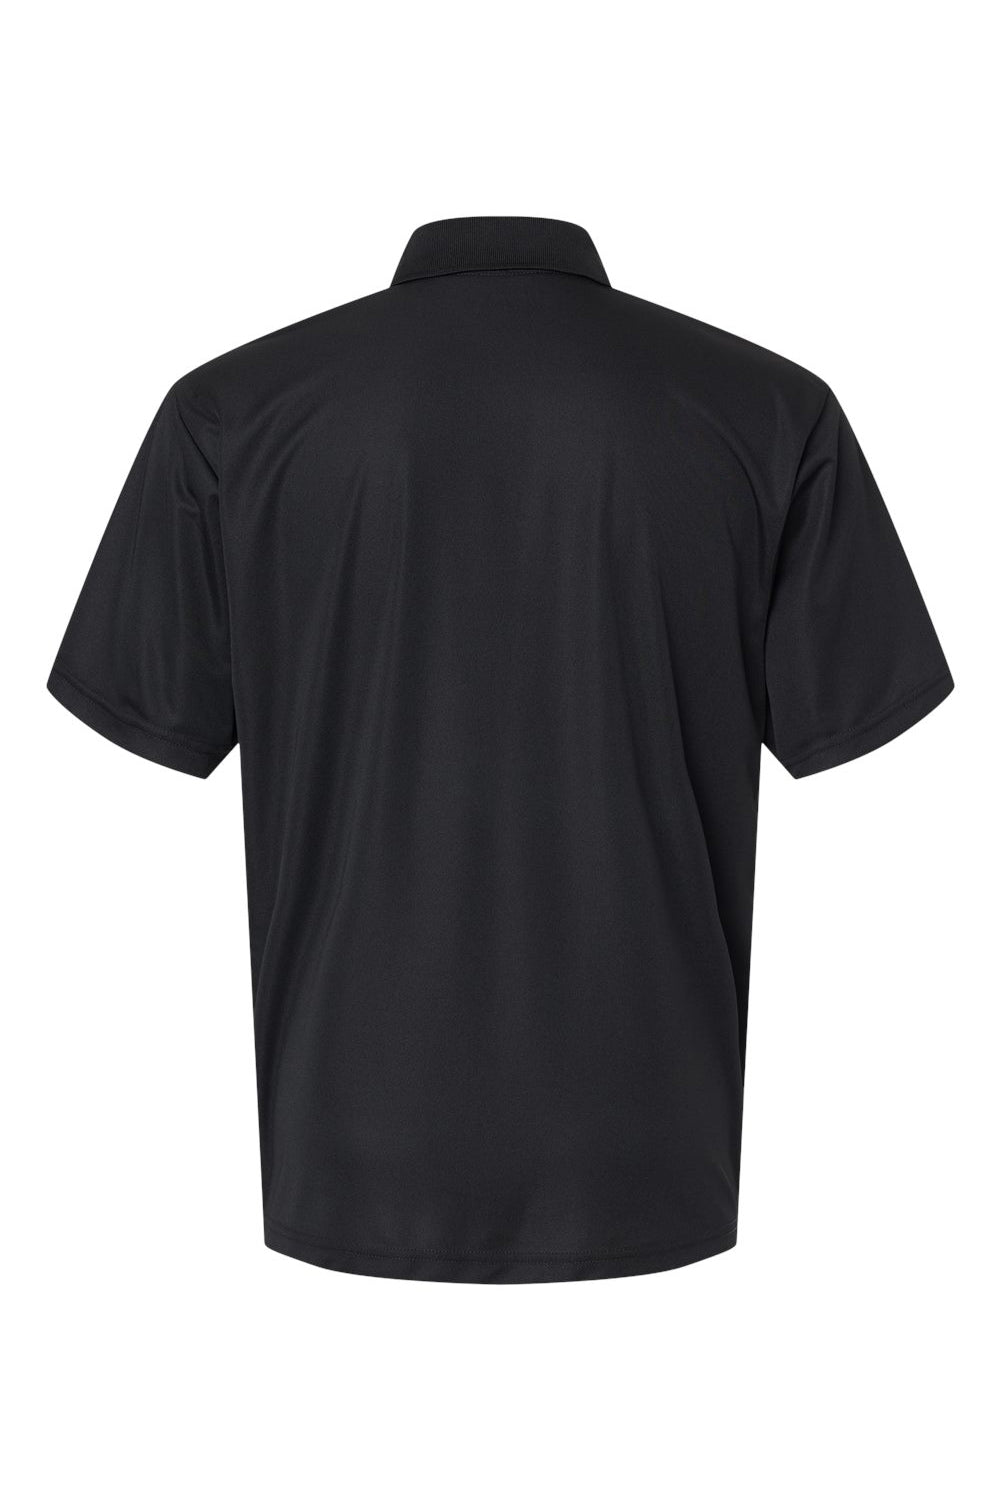 Paragon 500 Mens Sebring Performance Short Sleeve Polo Shirt Black Flat Back